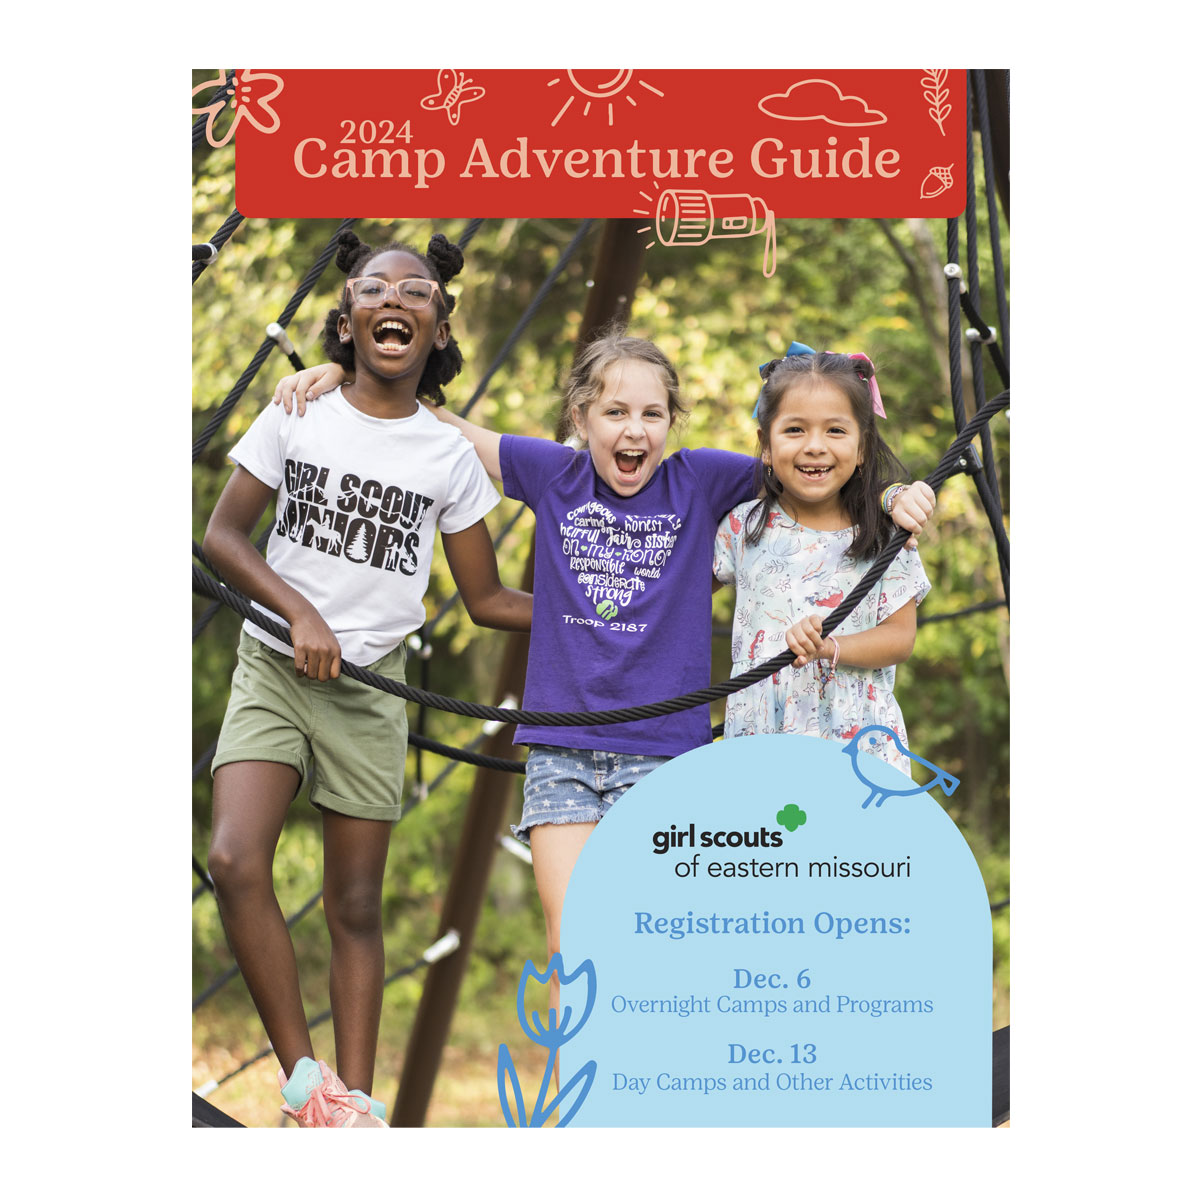 Camp Adventure Guide